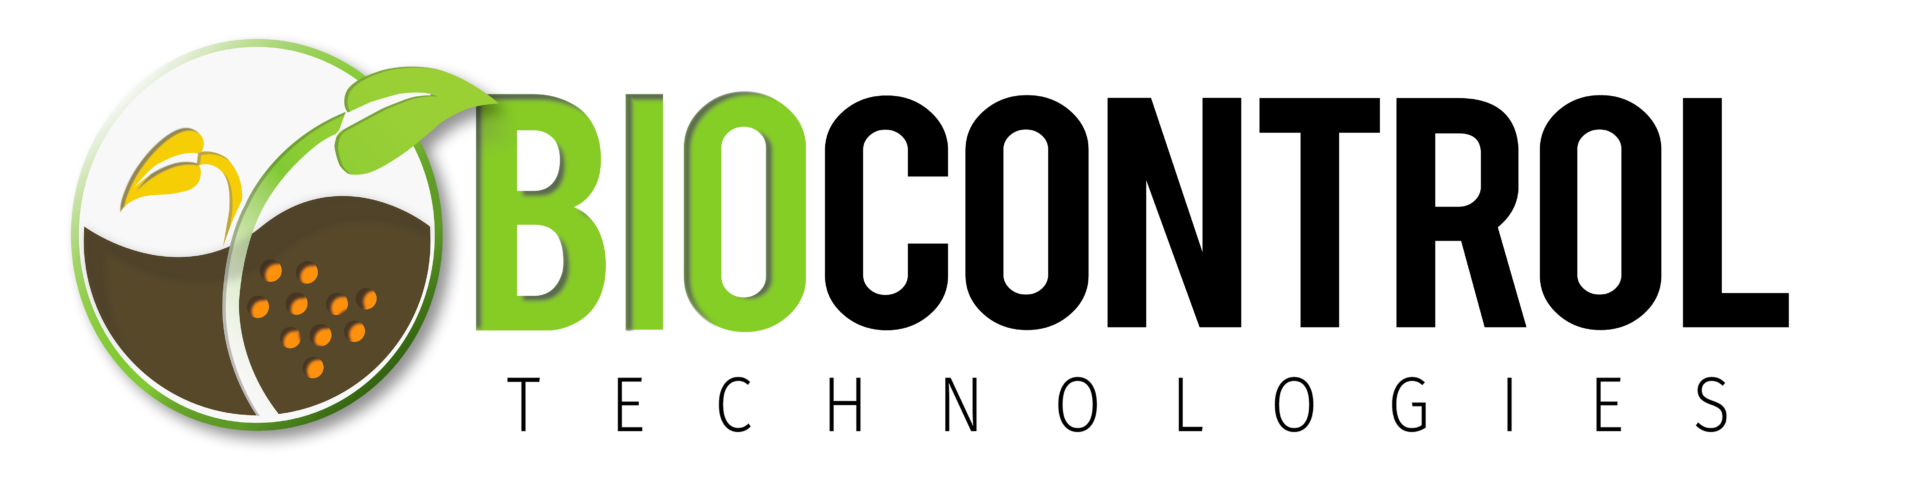 Biocontrol Technologies S.L. Logo